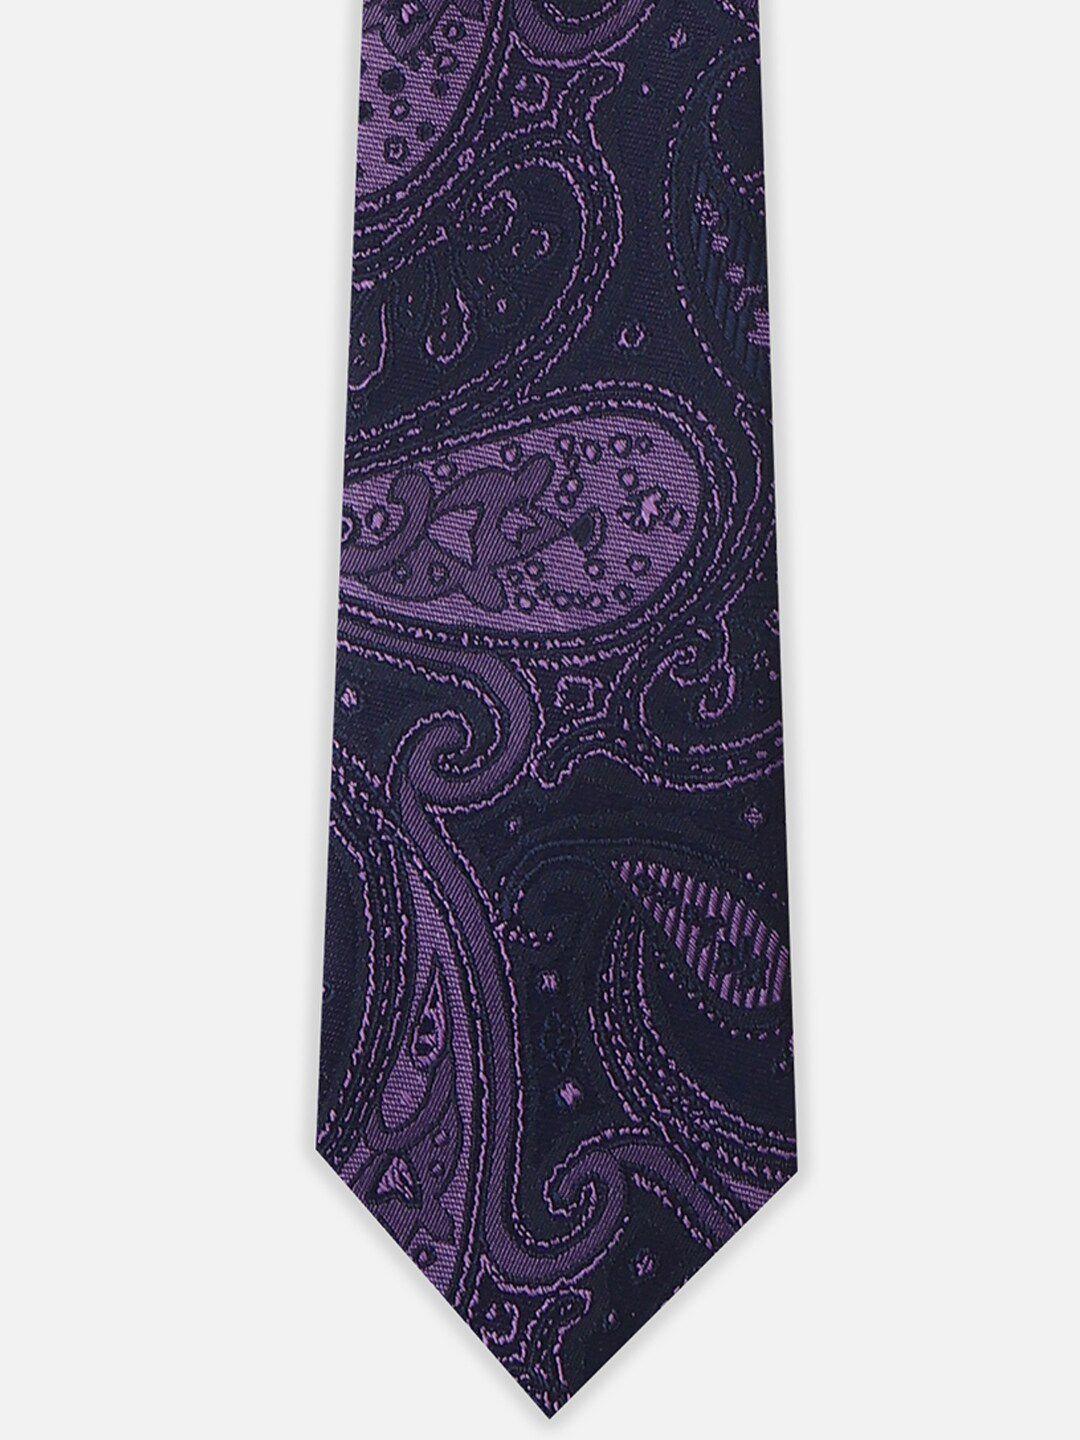 allen solly men woven design casual skinny tie